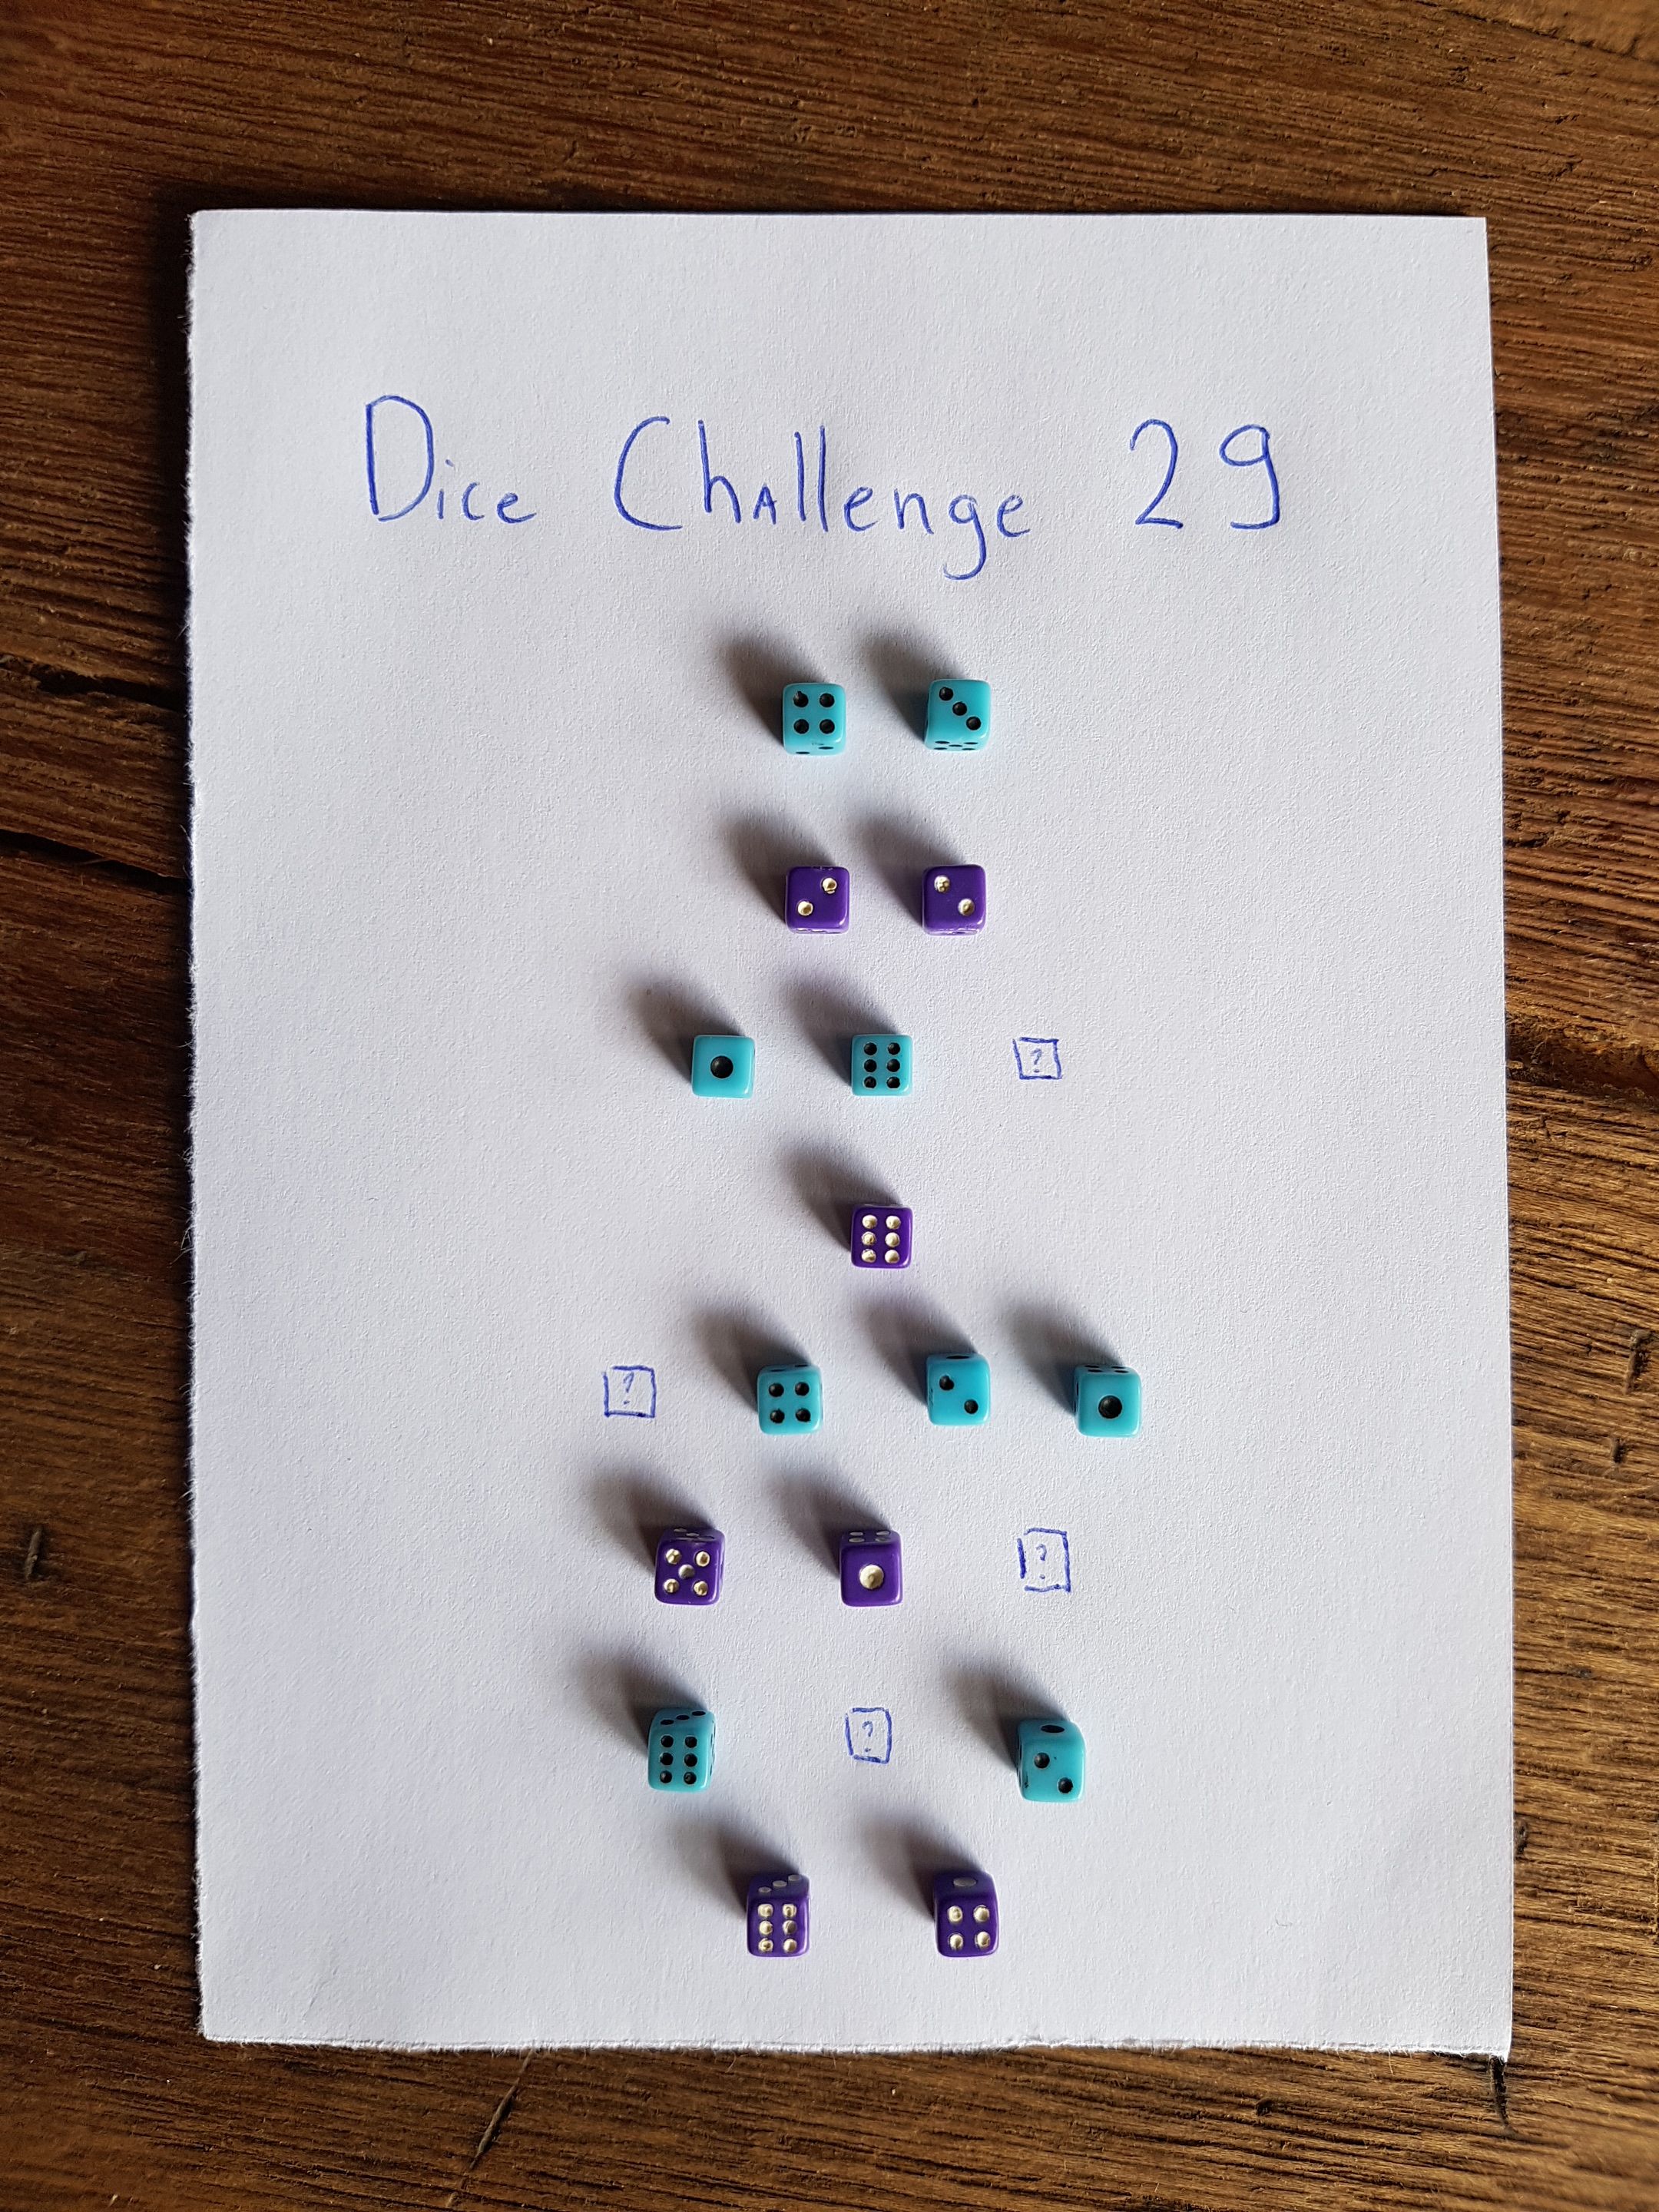 Dice Challenge 29.jpg